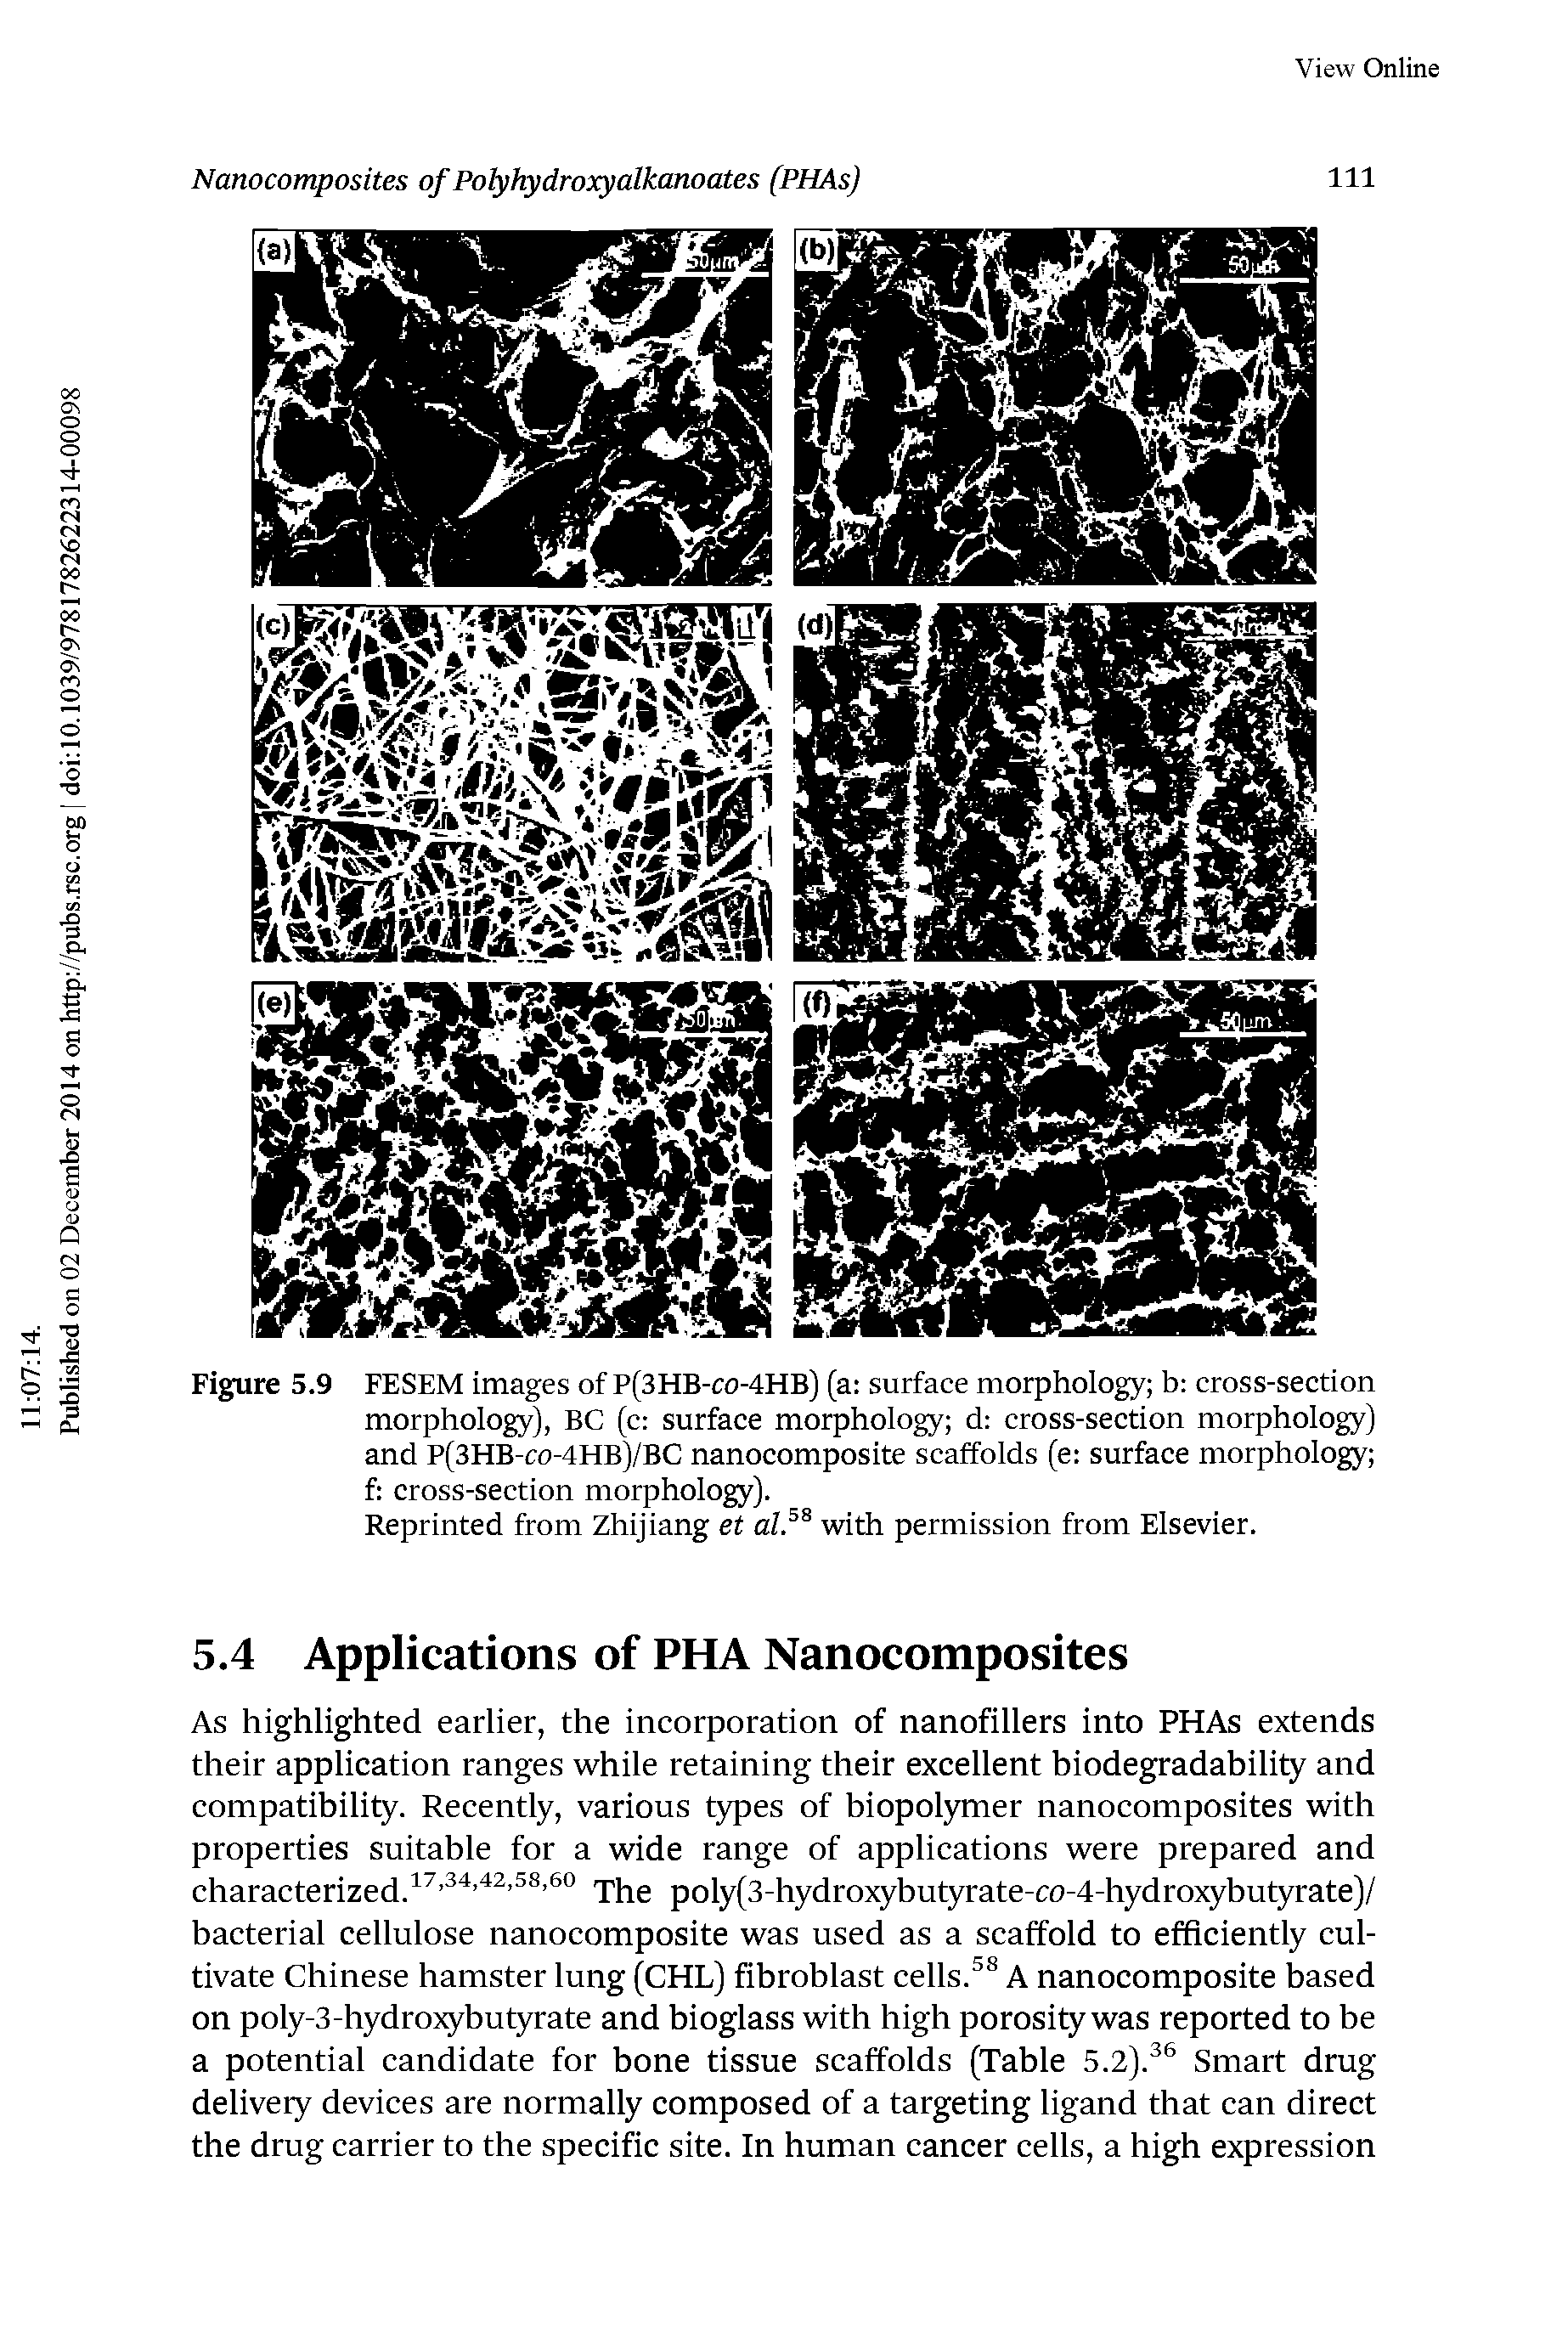 Figure 5.9 FESEM images of P(3HB-co-4HB) (a surface morphology b cross-section morphology), BC (c surface morphology d cross-section morphology) and P(3HB-co-4HB)/BC nanocomposite scaffolds (e surface morphology f cross-section morphology).